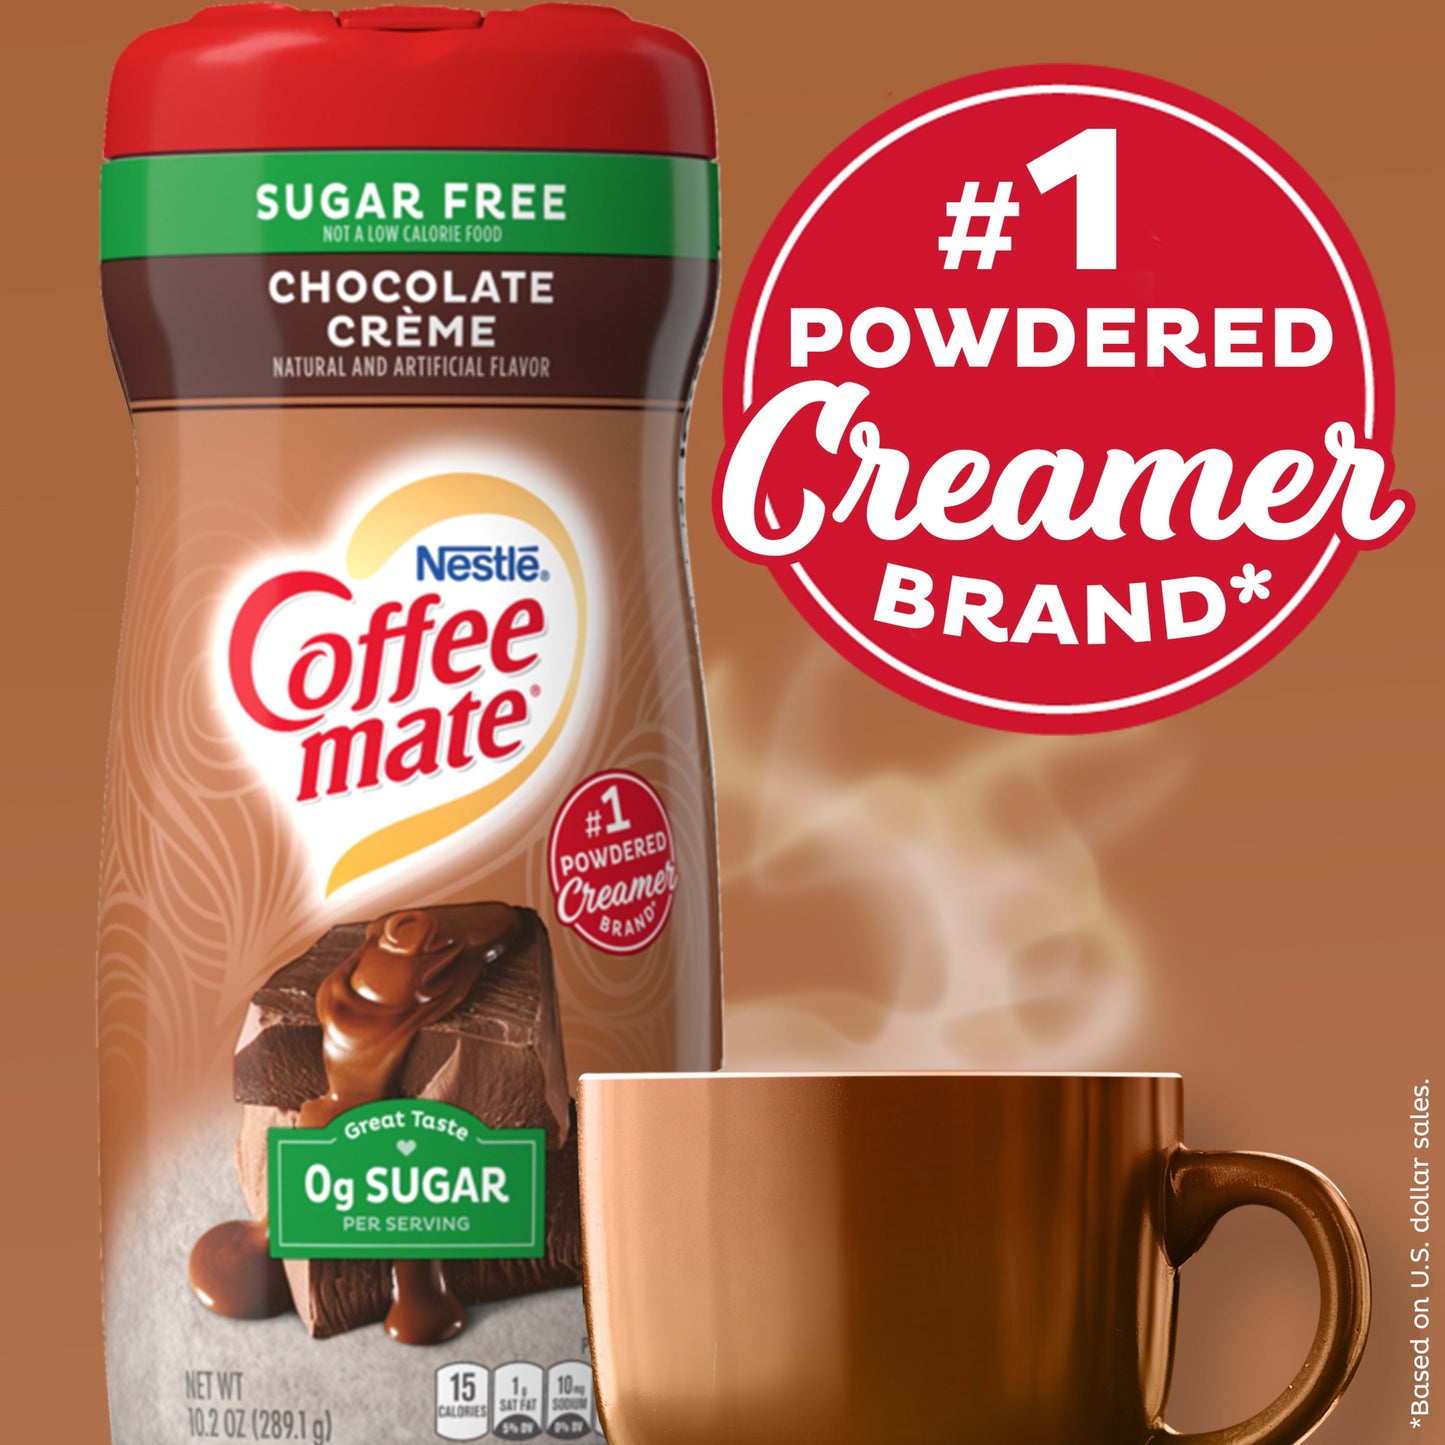 Nestle Coffee mate Chocolate Creme Sugar Free Powder Coffee Creamer, 10.2 oz